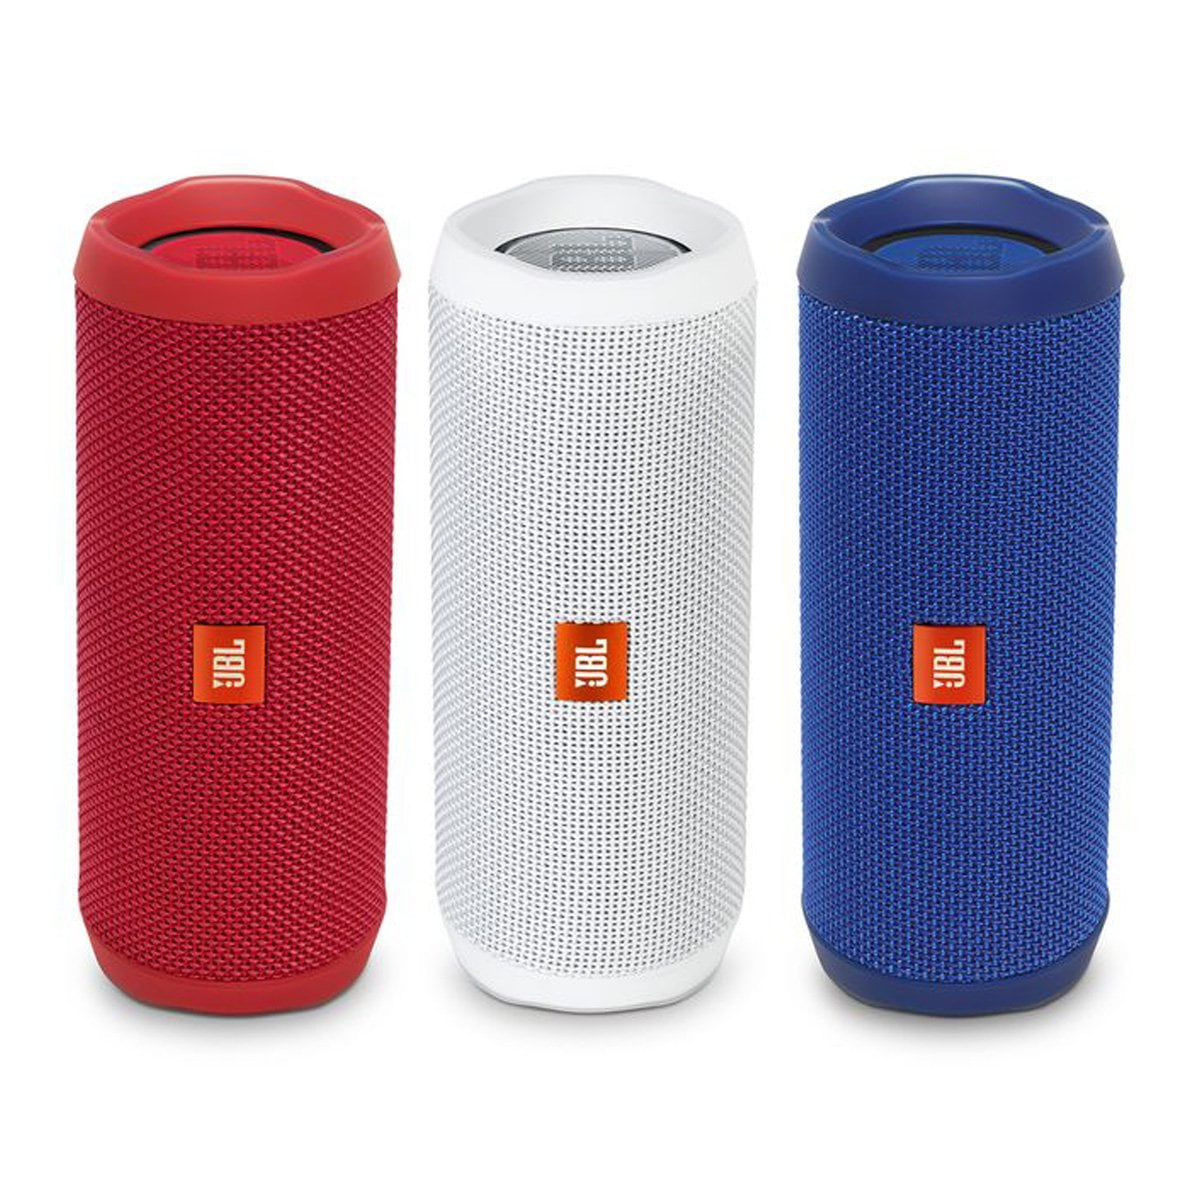 Bluetooth speaker as bosses day gift